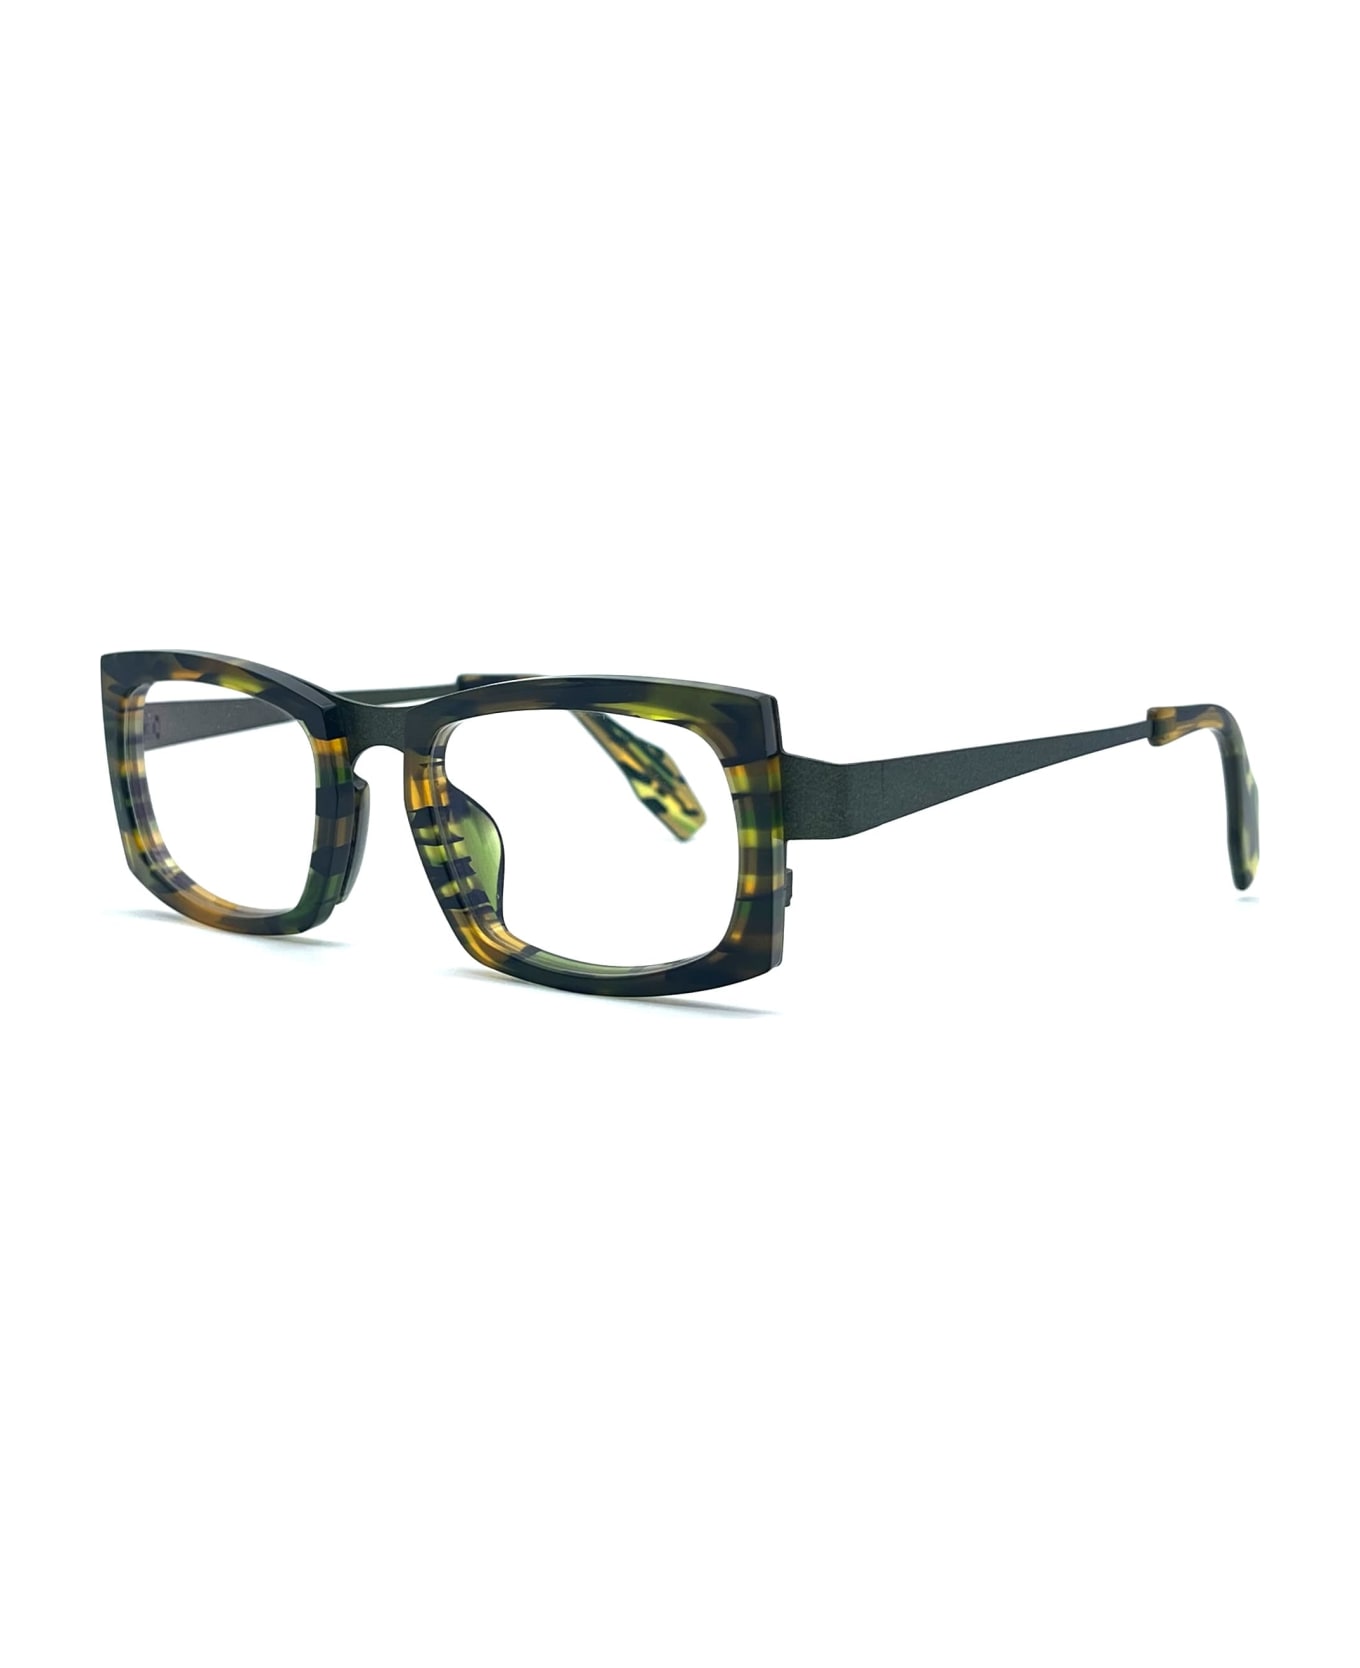 Theo Eyewear Maui - 5 Glasses - green アイウェア